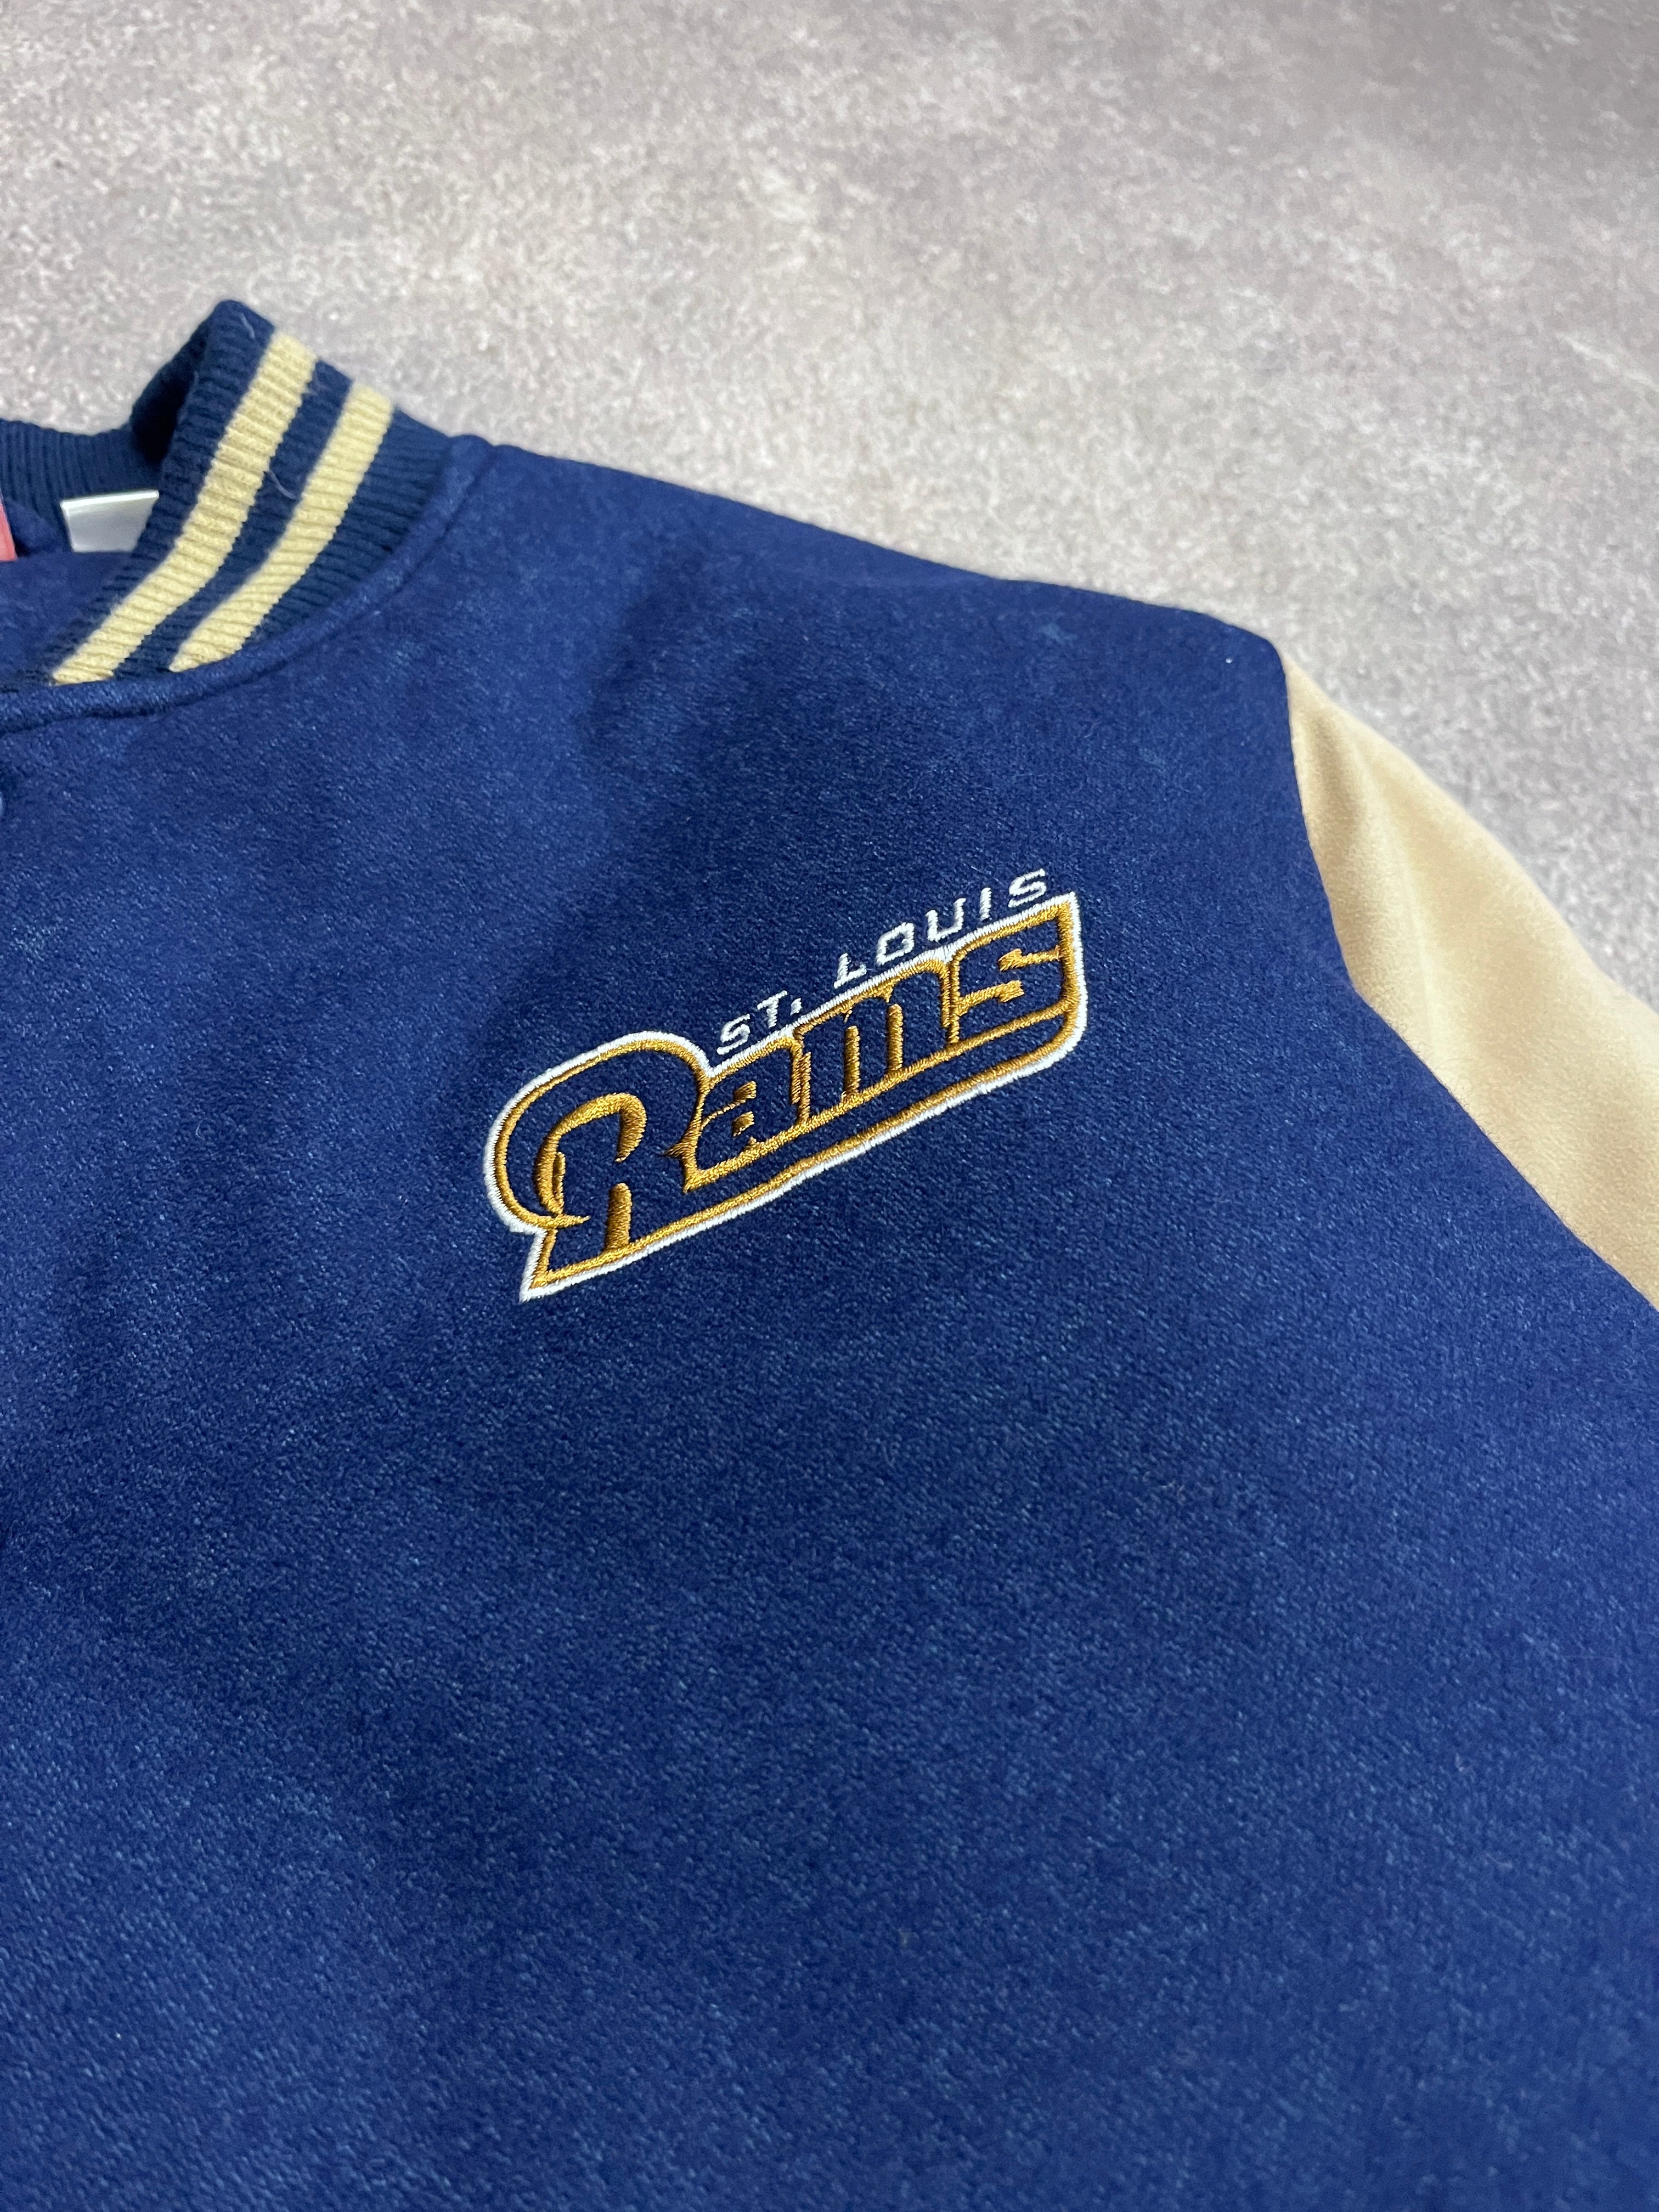 Vintage St. Louis Rams Varsity Jacket Blue // X-Small - RHAGHOUSE VINTAGE